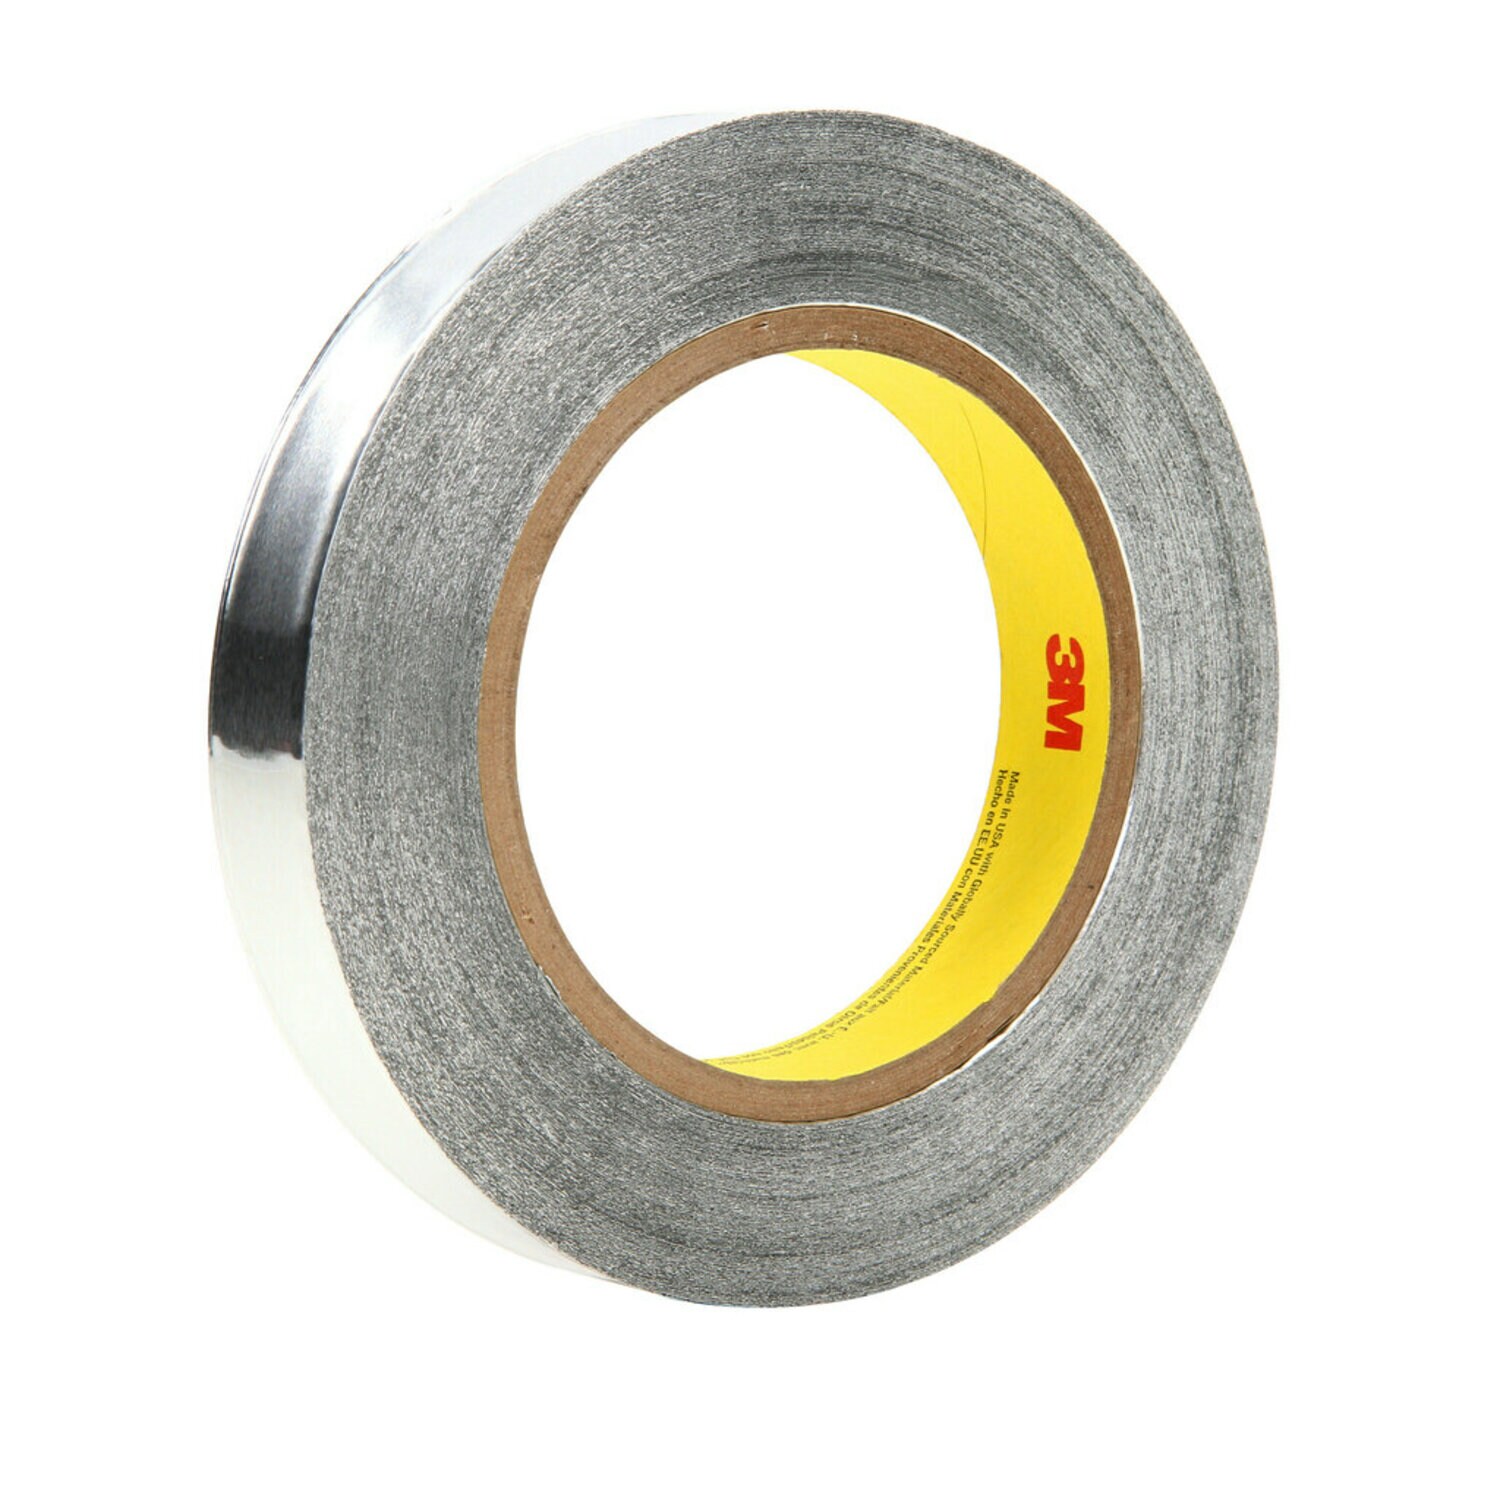 7100053636 - 3M Aluminum Foil Tape 425, Silver, 19 mm x 55 m, 4.6 mil, 48 rolls per
case